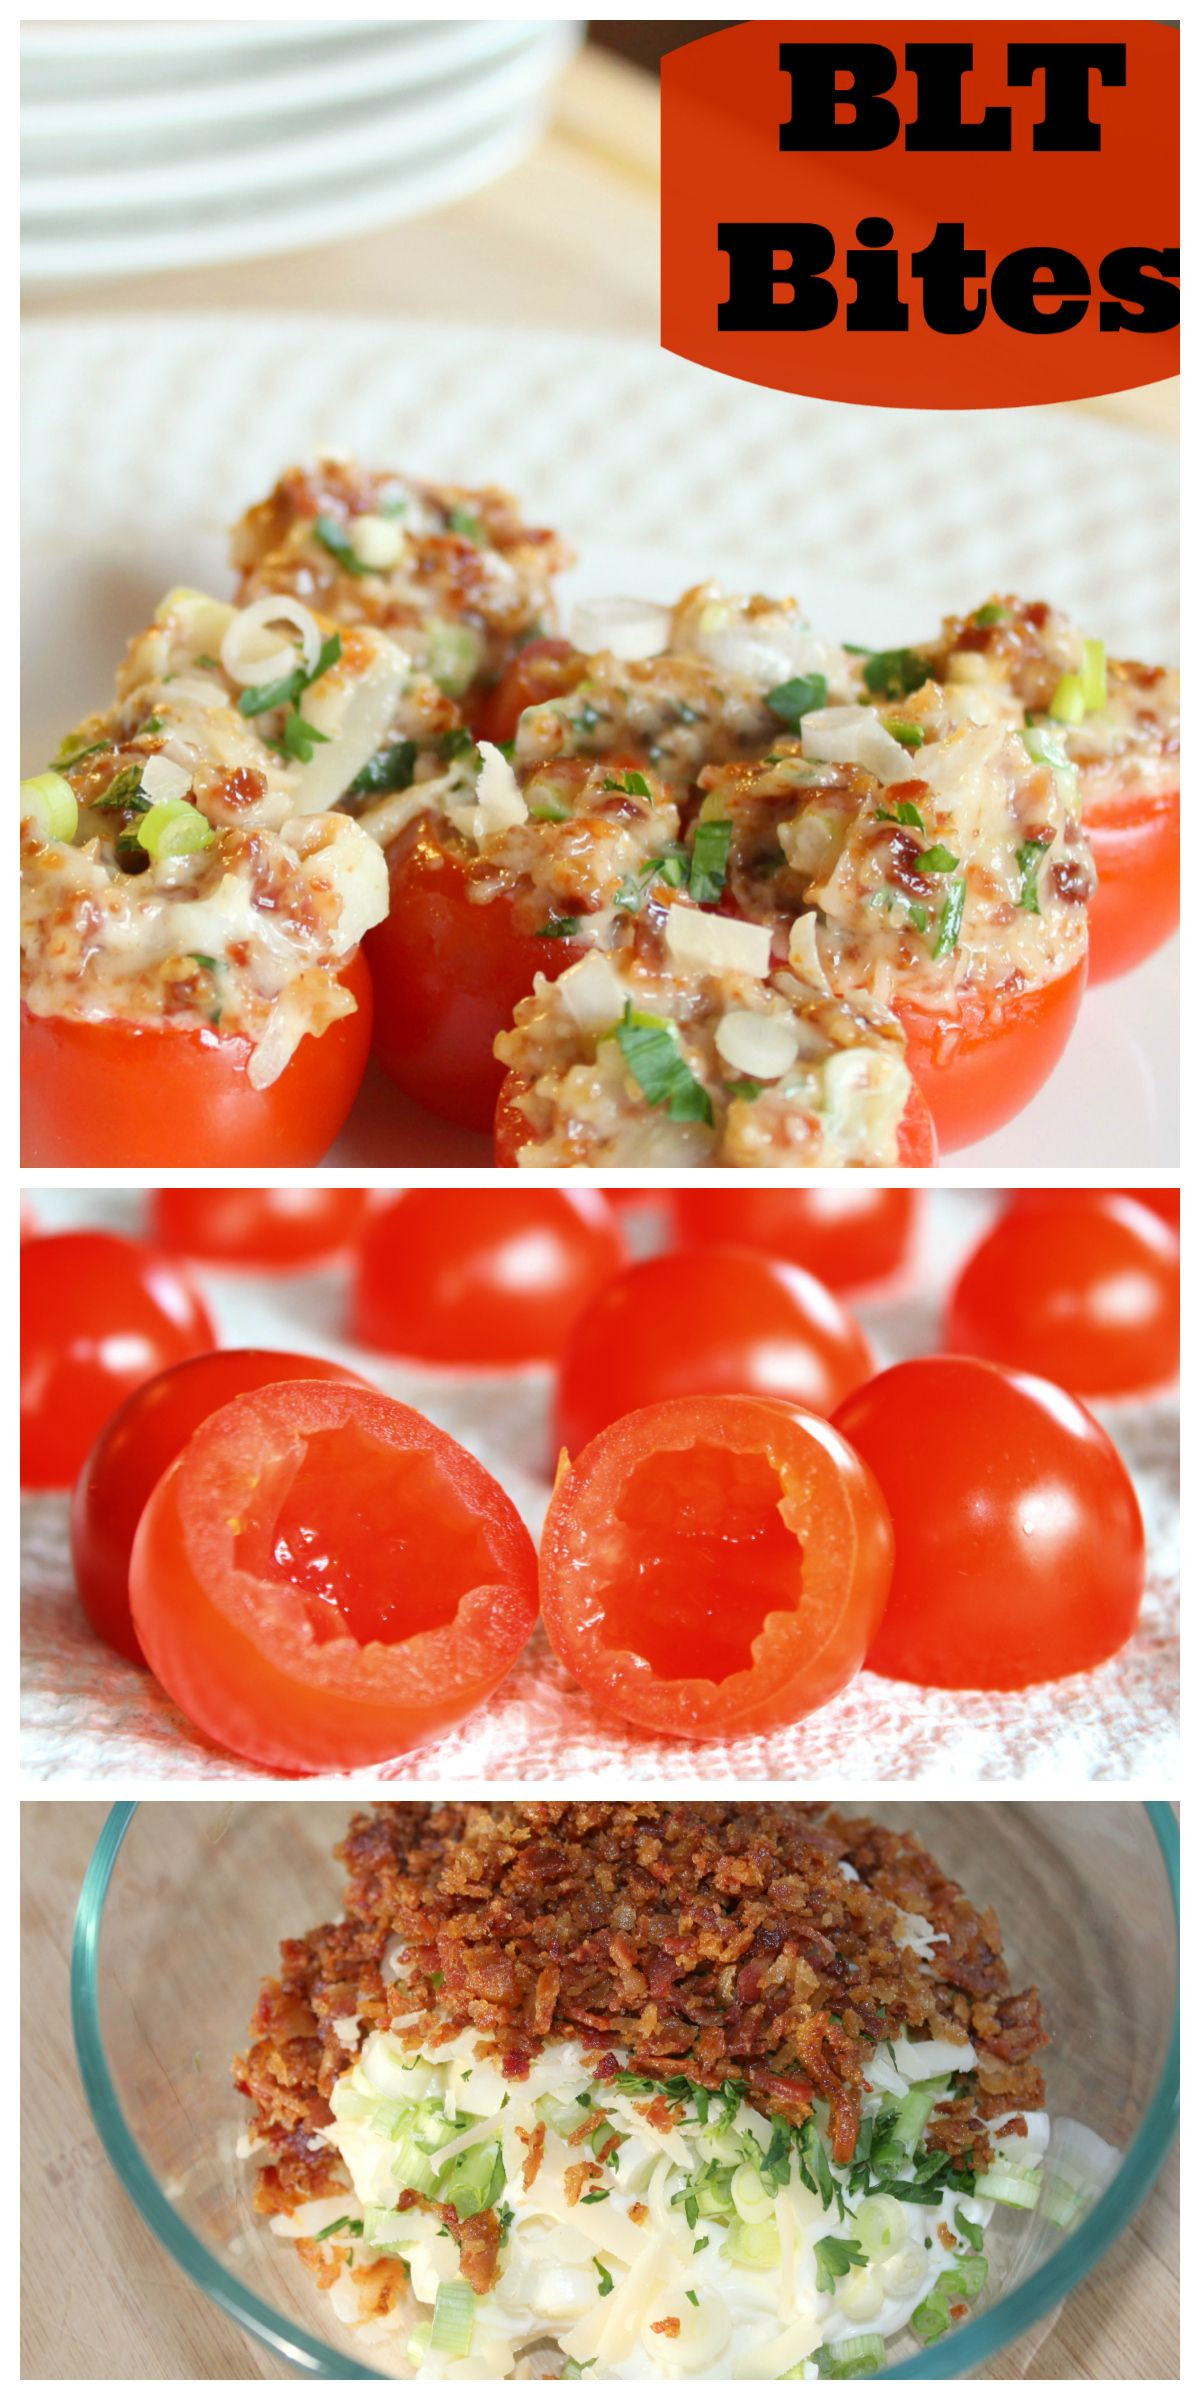 Cherry Tomato Appetizer Recipes
 blt cherry tomato appetizers